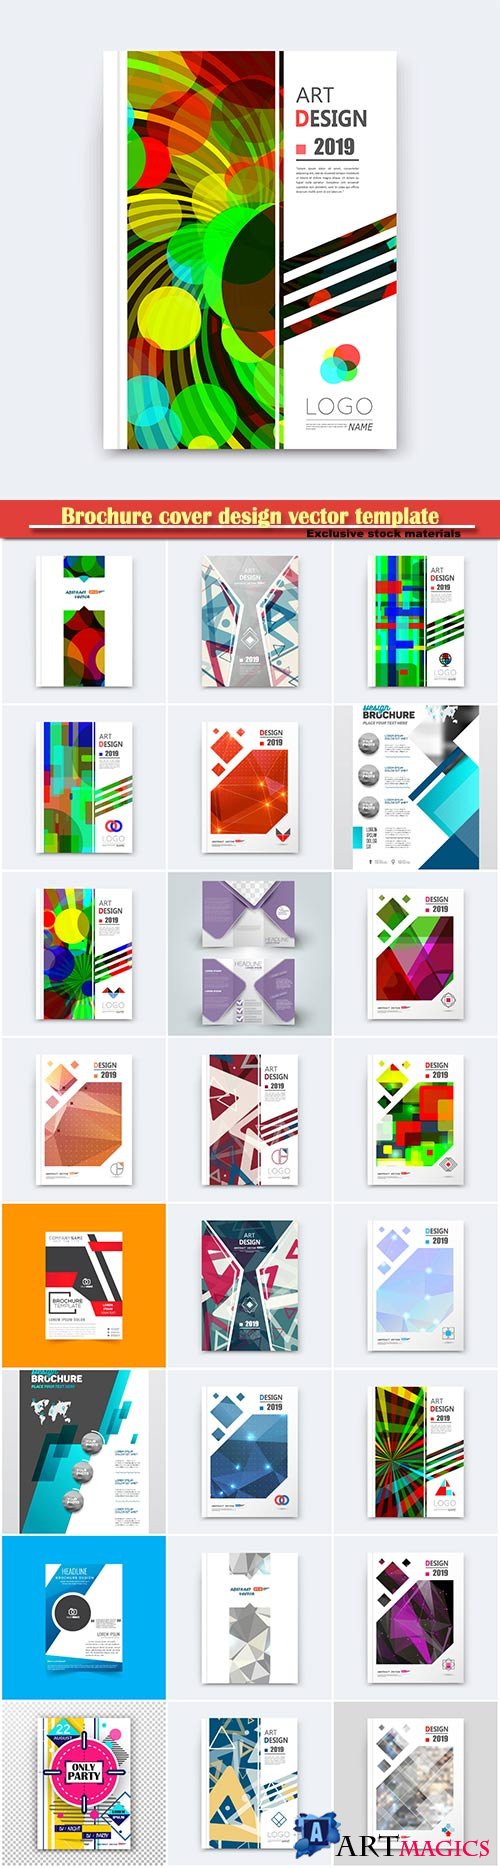 Brochure cover design vector template # 15